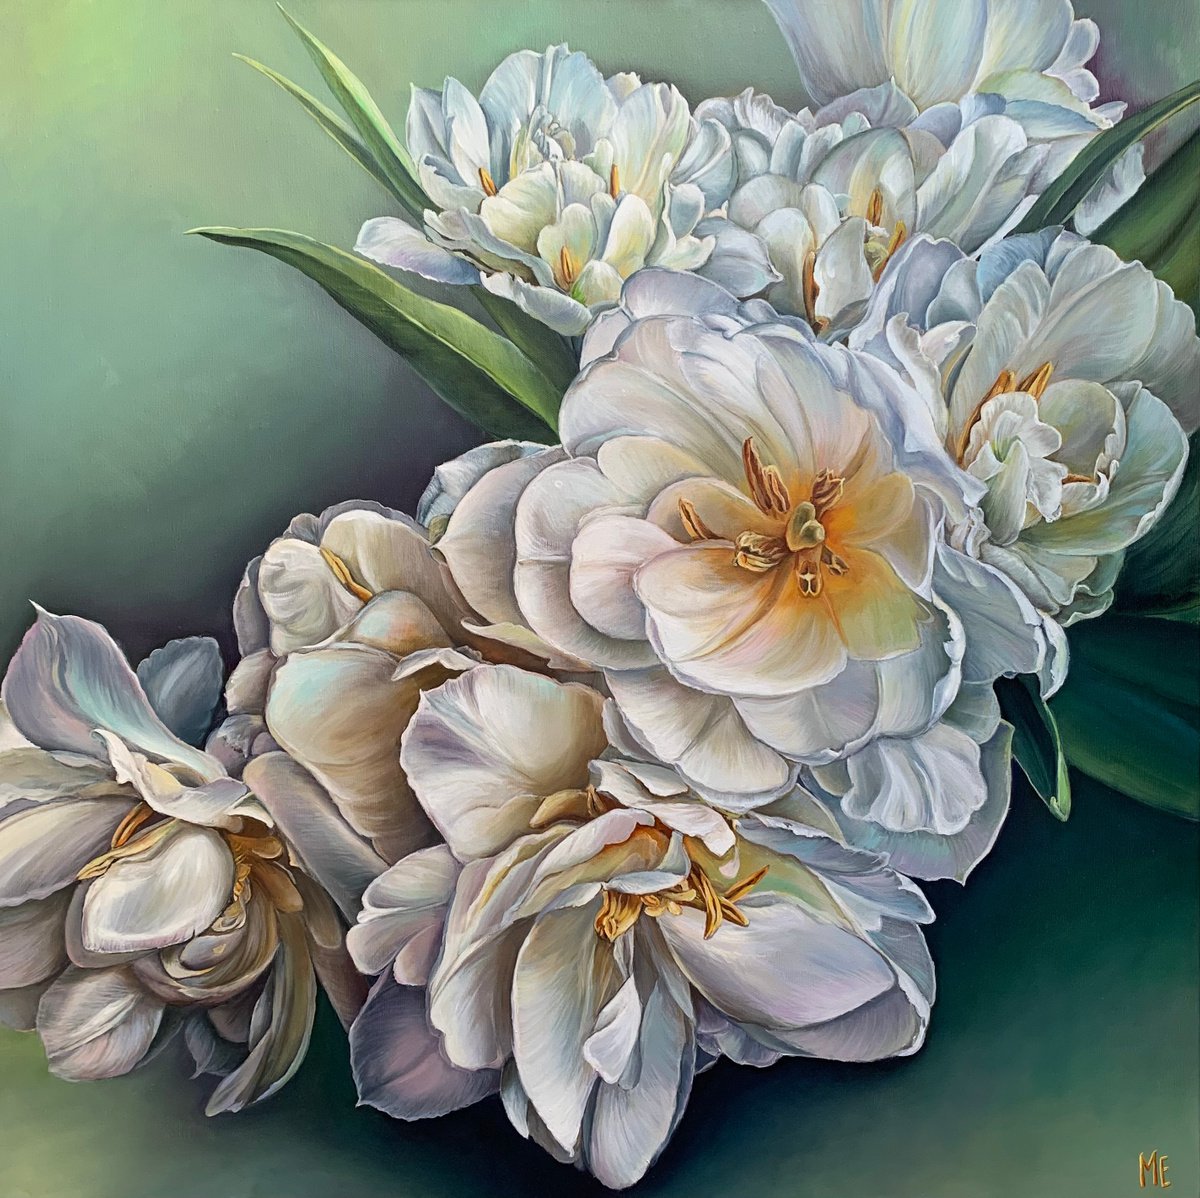 Flower delight by Olena Hontar